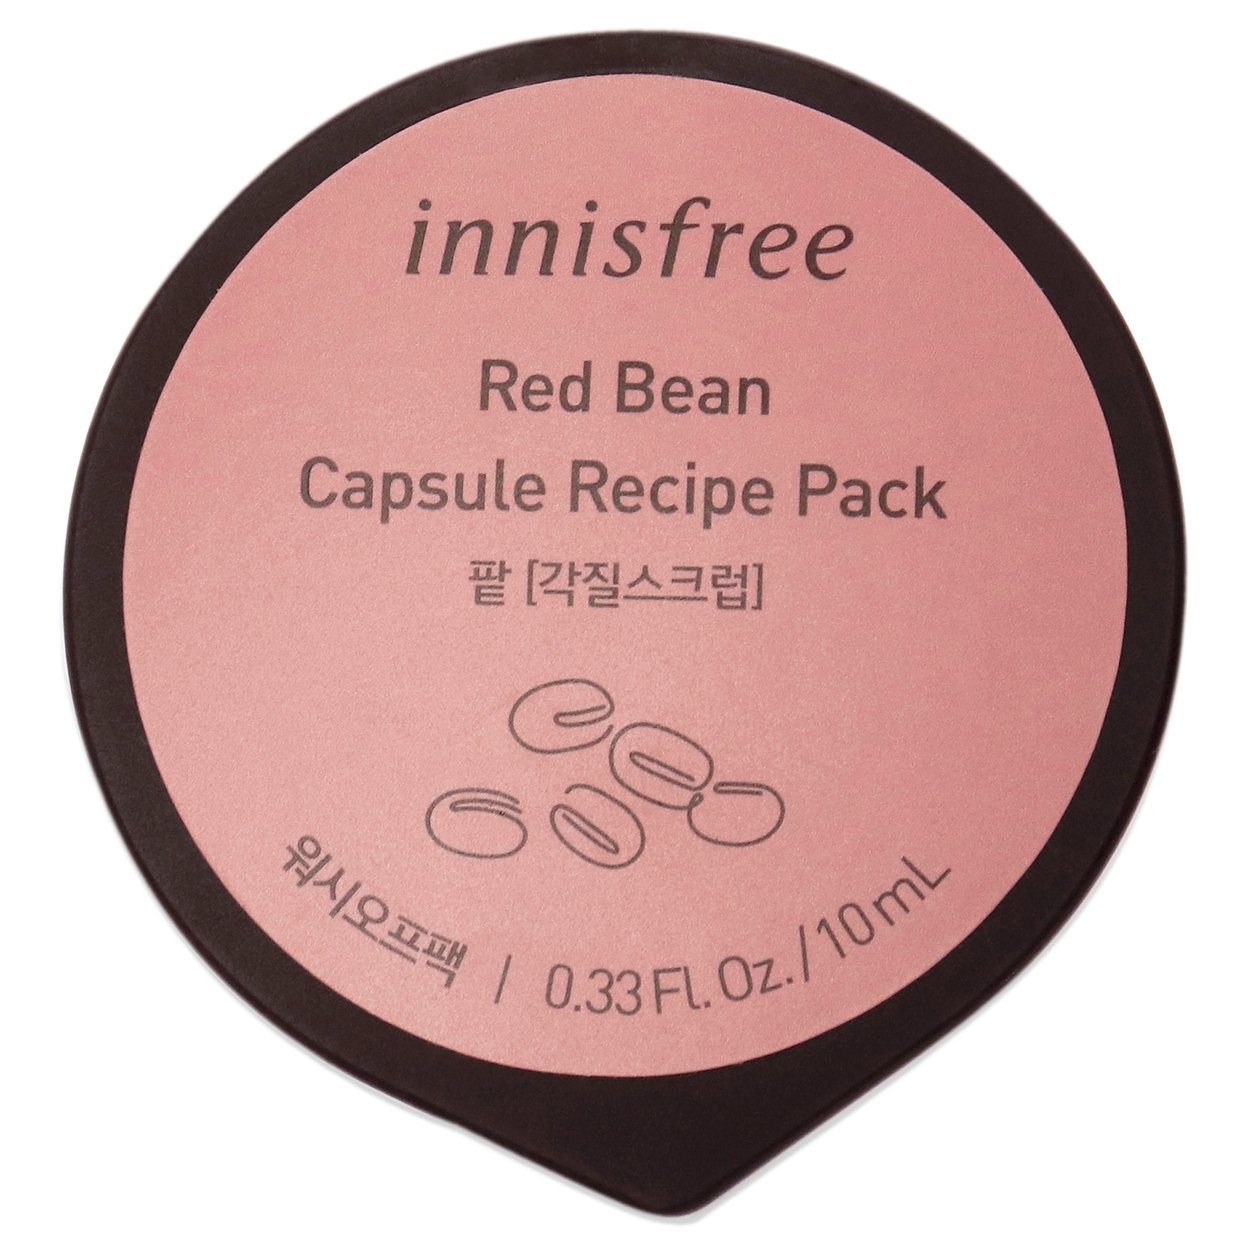 Innisfree Capsule Recipe Pack Mask - Red Bean 0.33 Oz